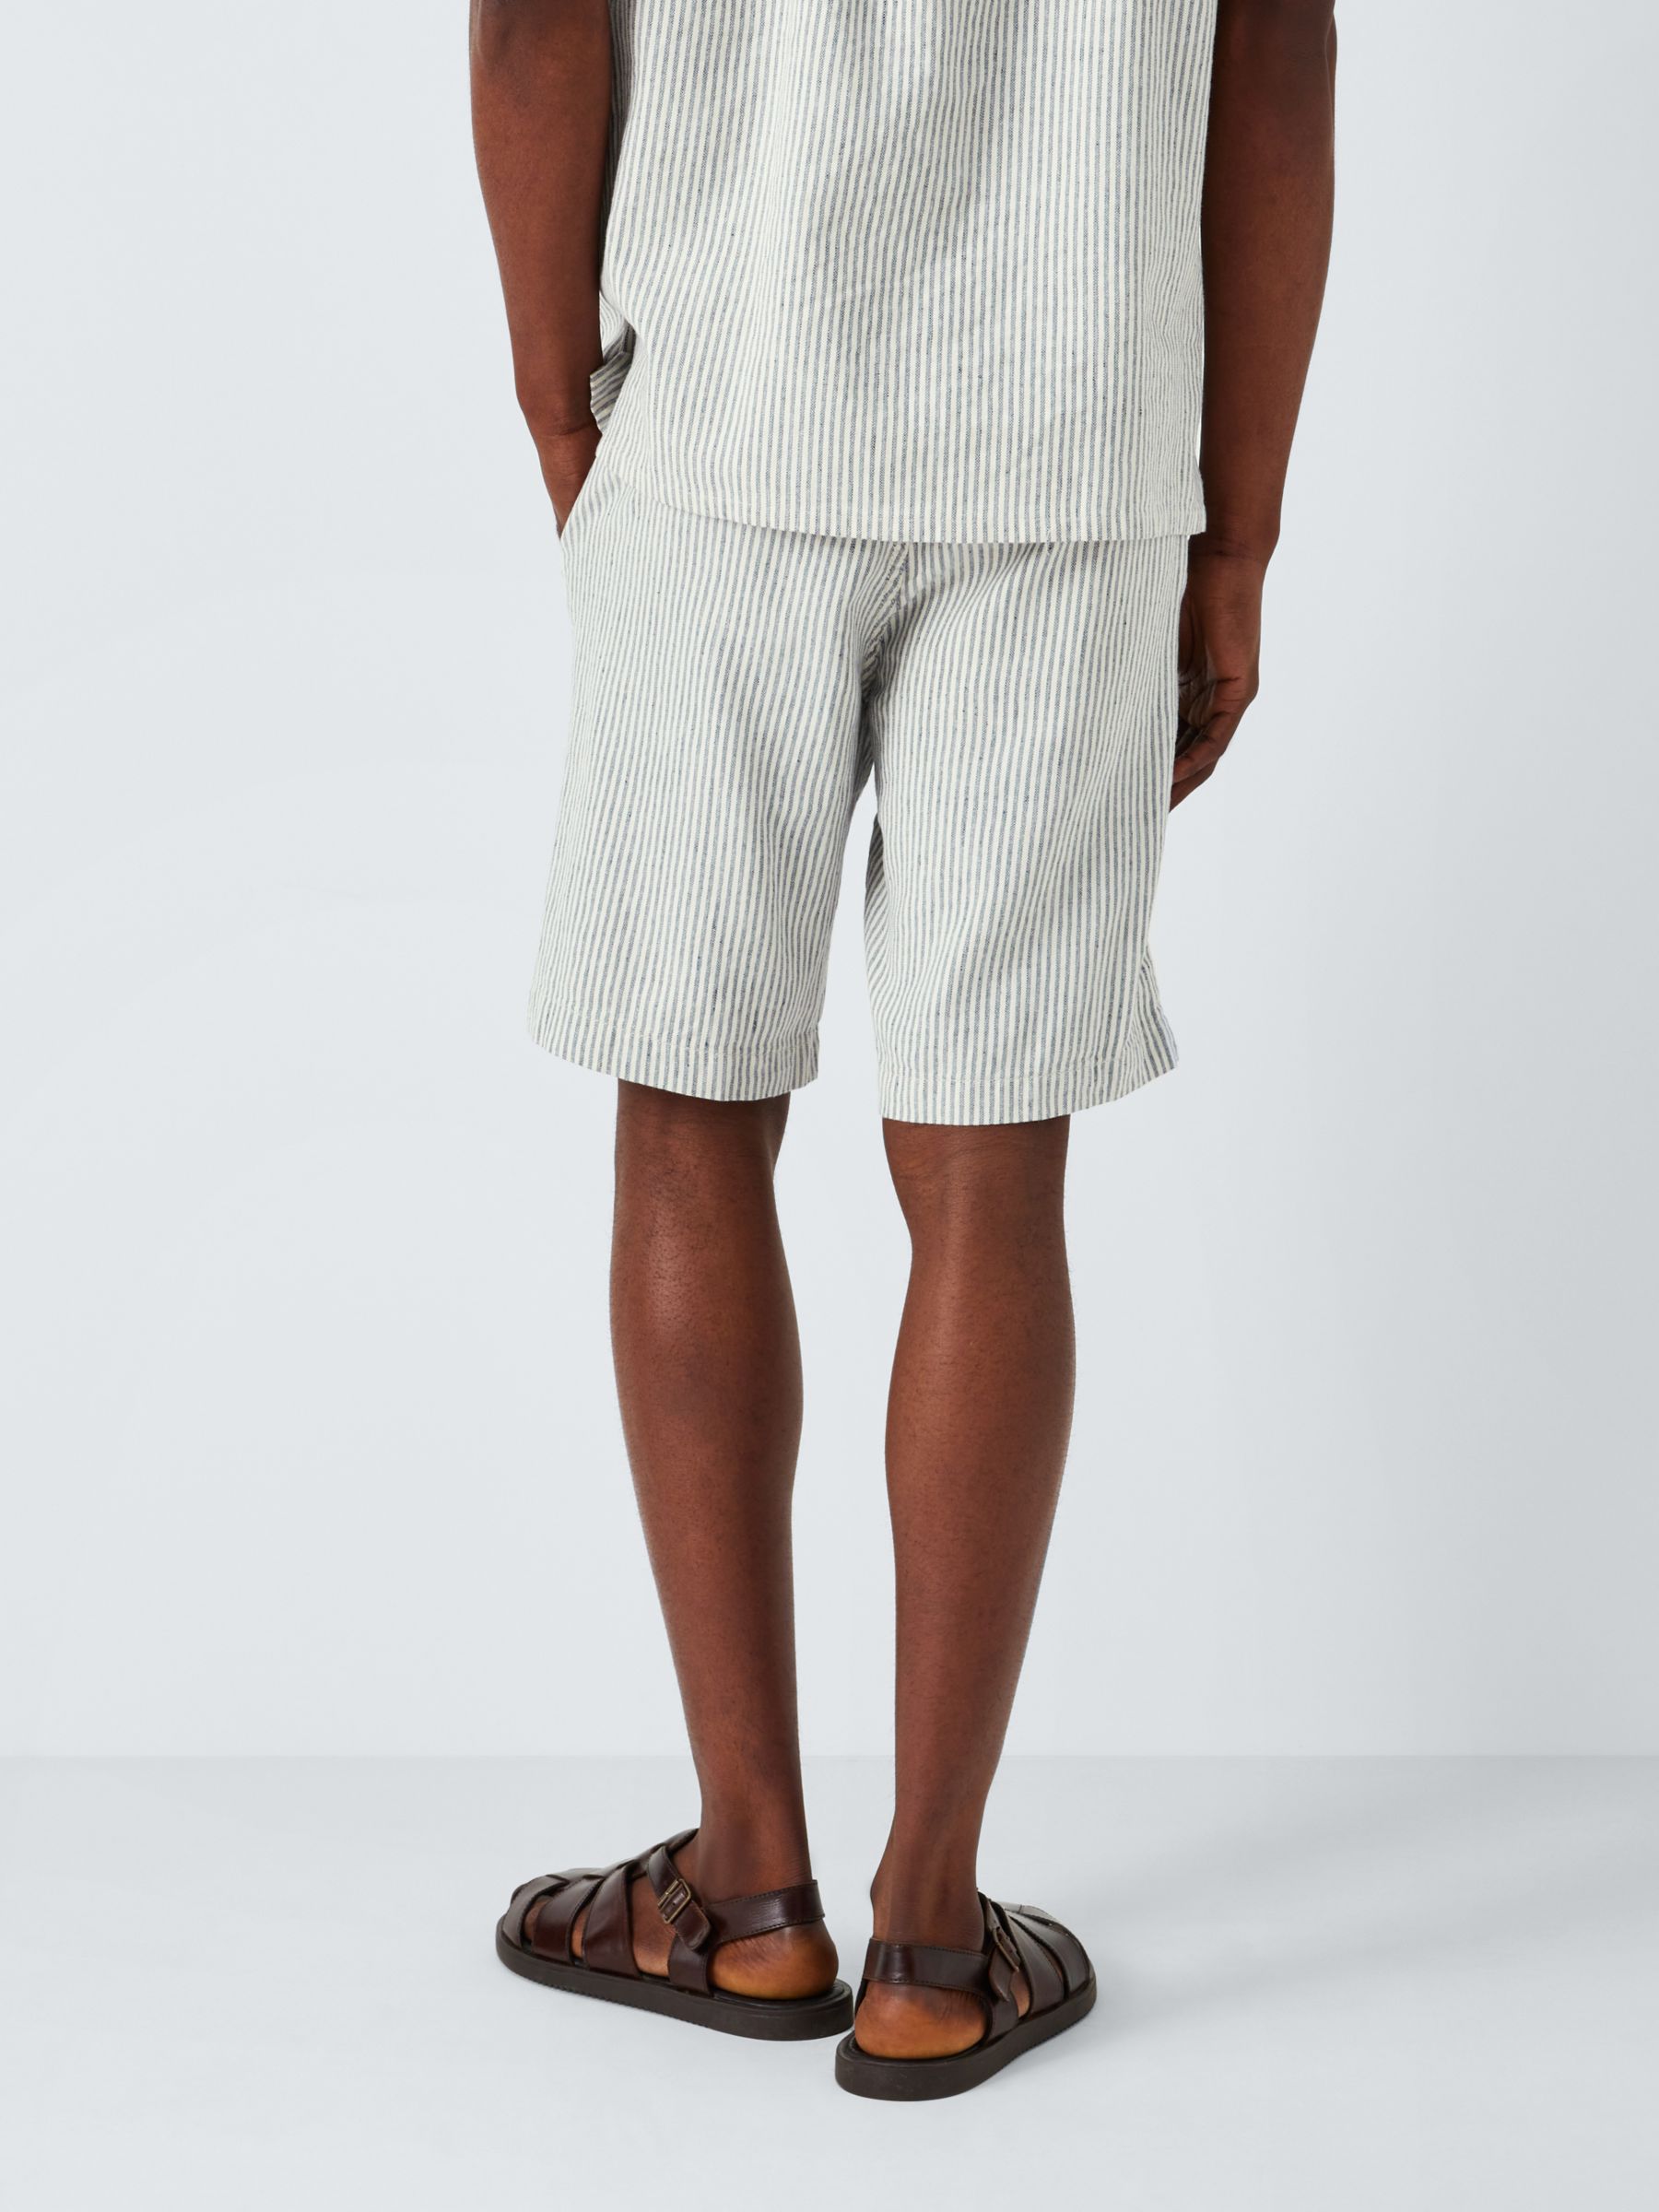 Buy John Lewis Linen Blend Stripe Shorts, Navy/White Online at johnlewis.com